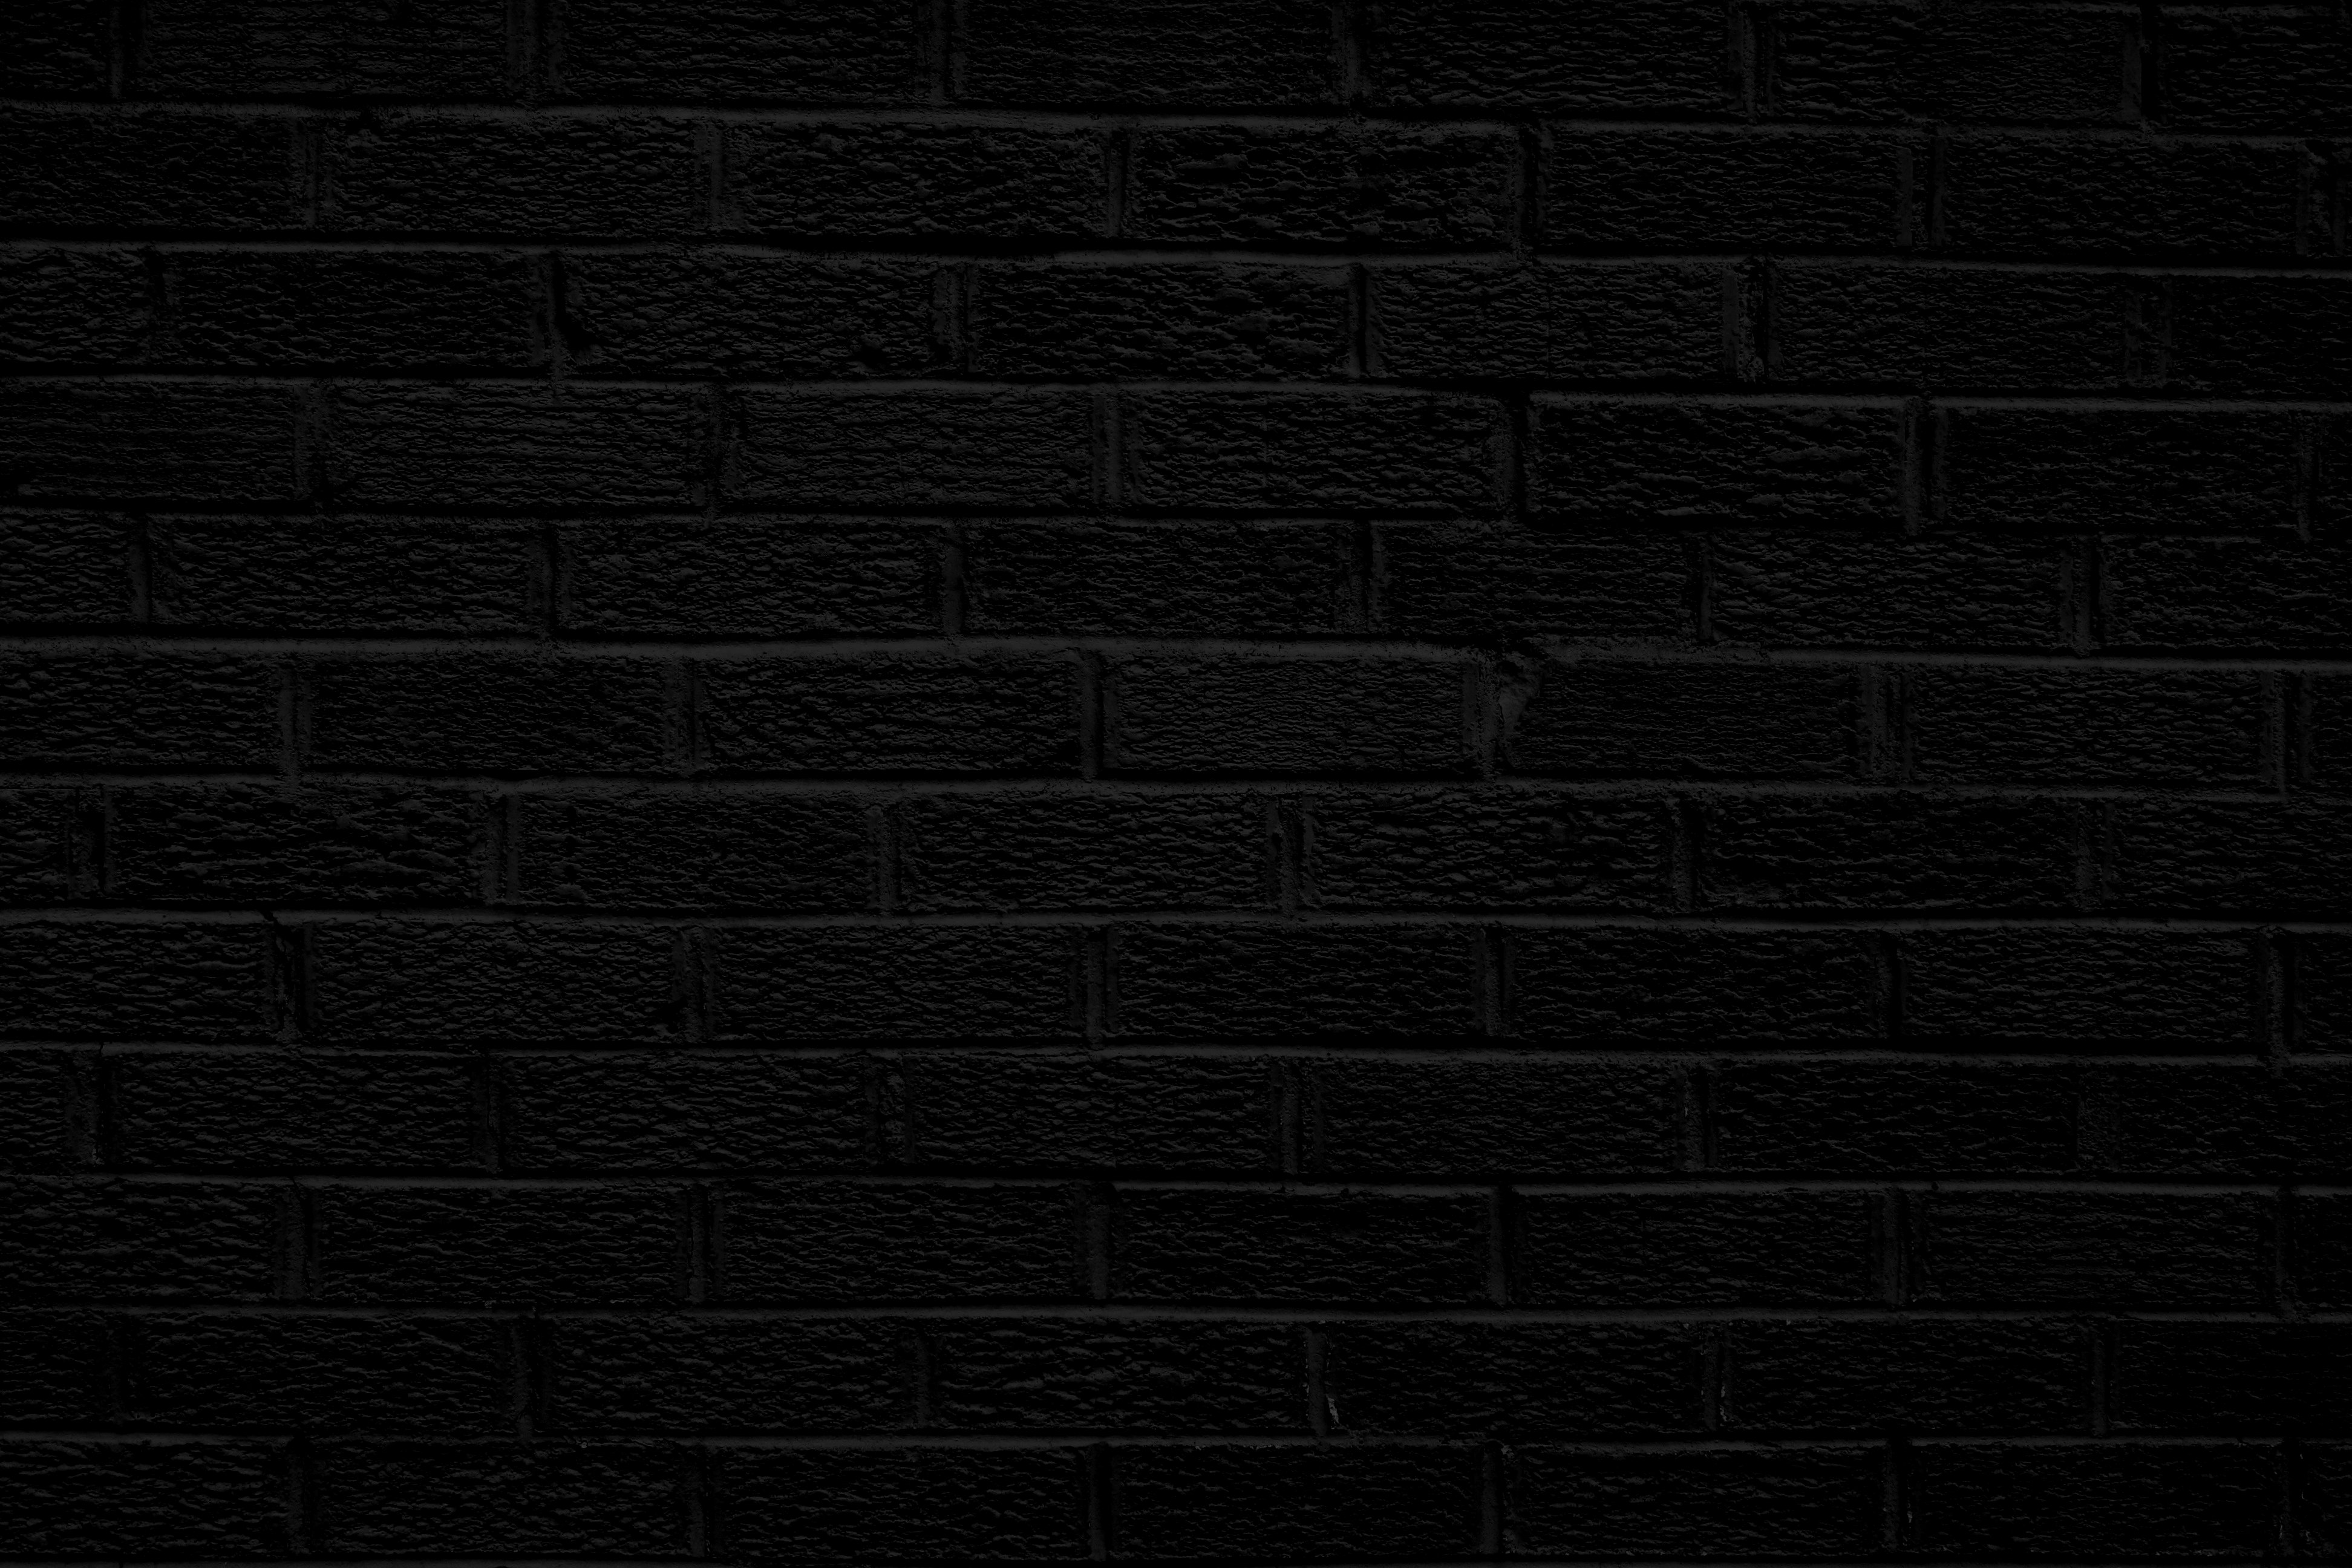 Black Brick Wall Texture Picture | Free Photograph | Photos Public Domain